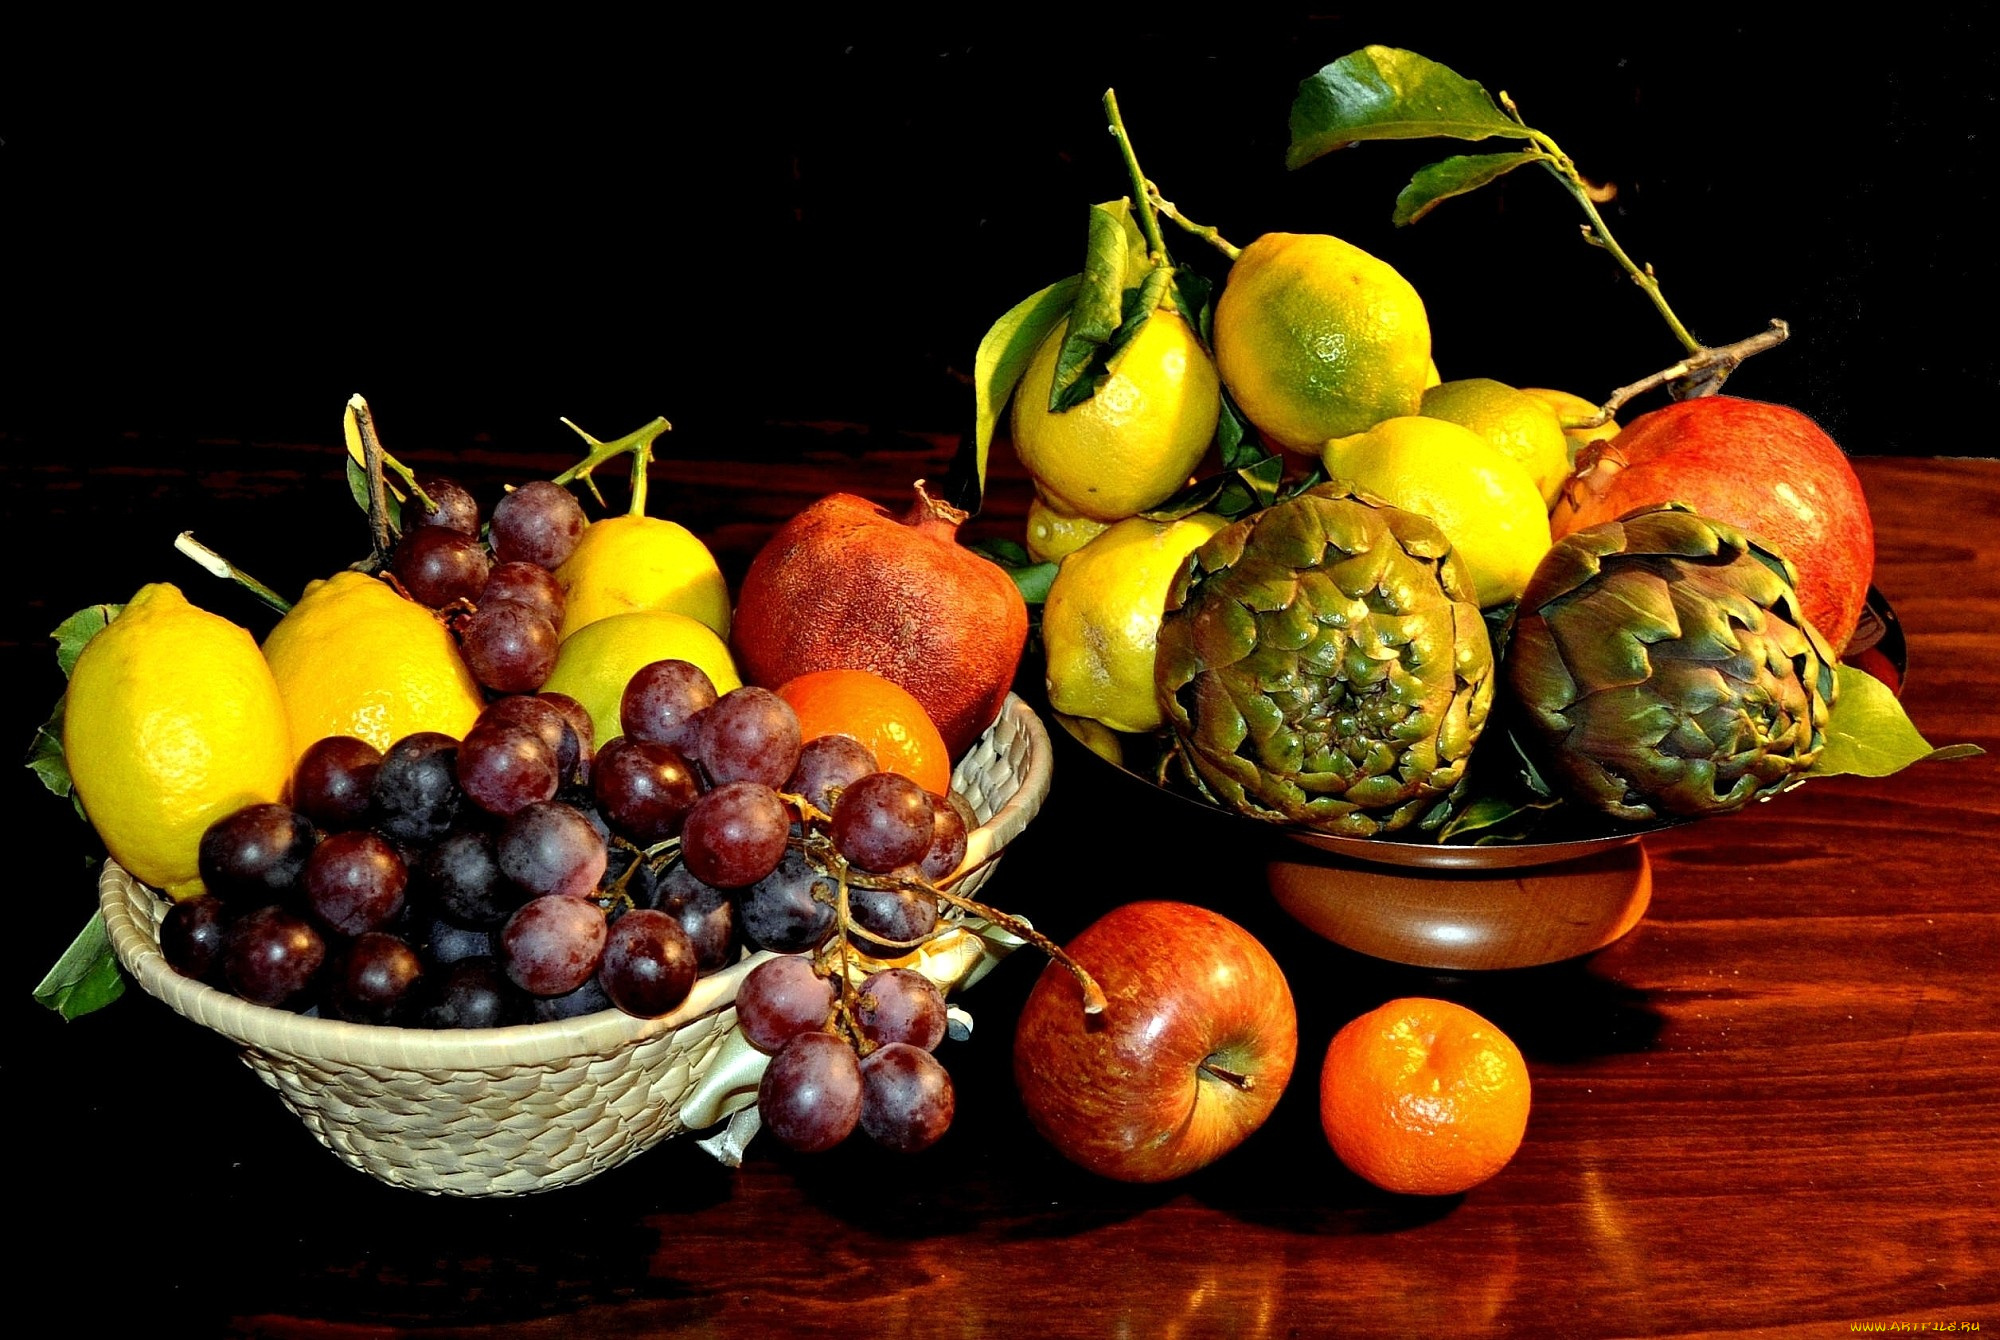 еда, фрукты, овощи, вместе, мандарин, артишоки, яблоки, лимоны, гранат, виноград